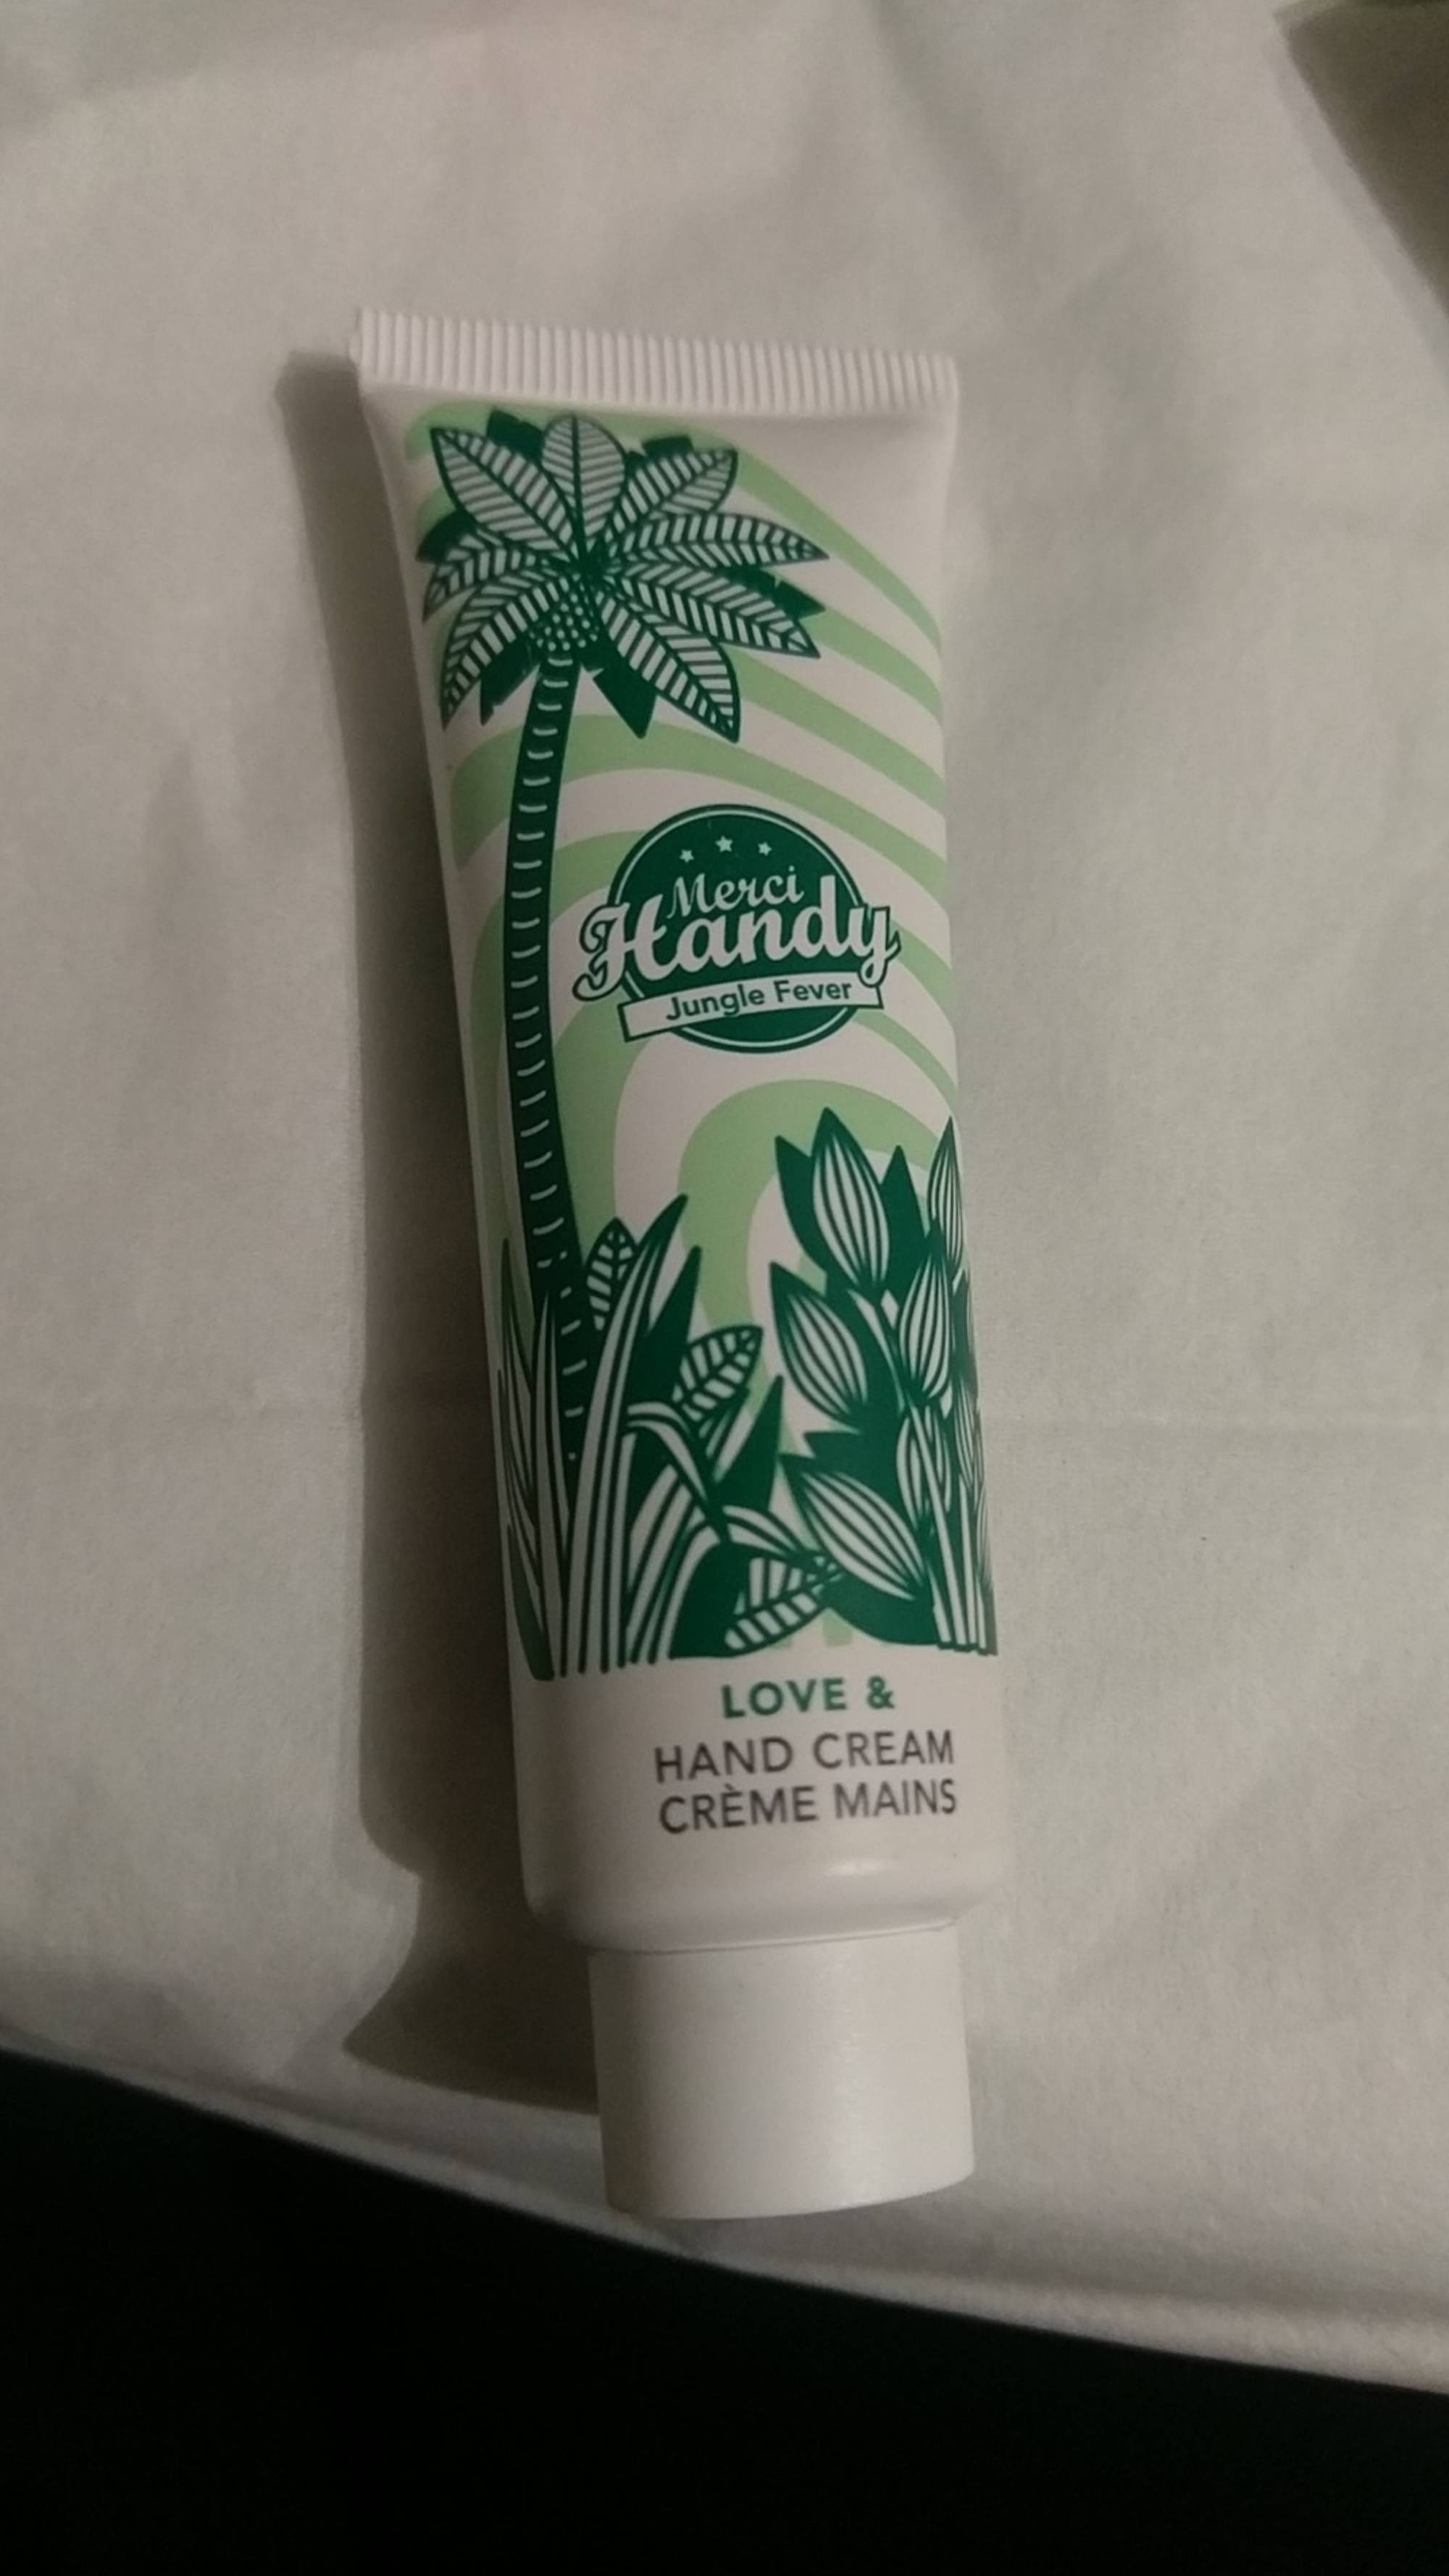 MERCI HANDY - Jungle fever - Love & hand cream